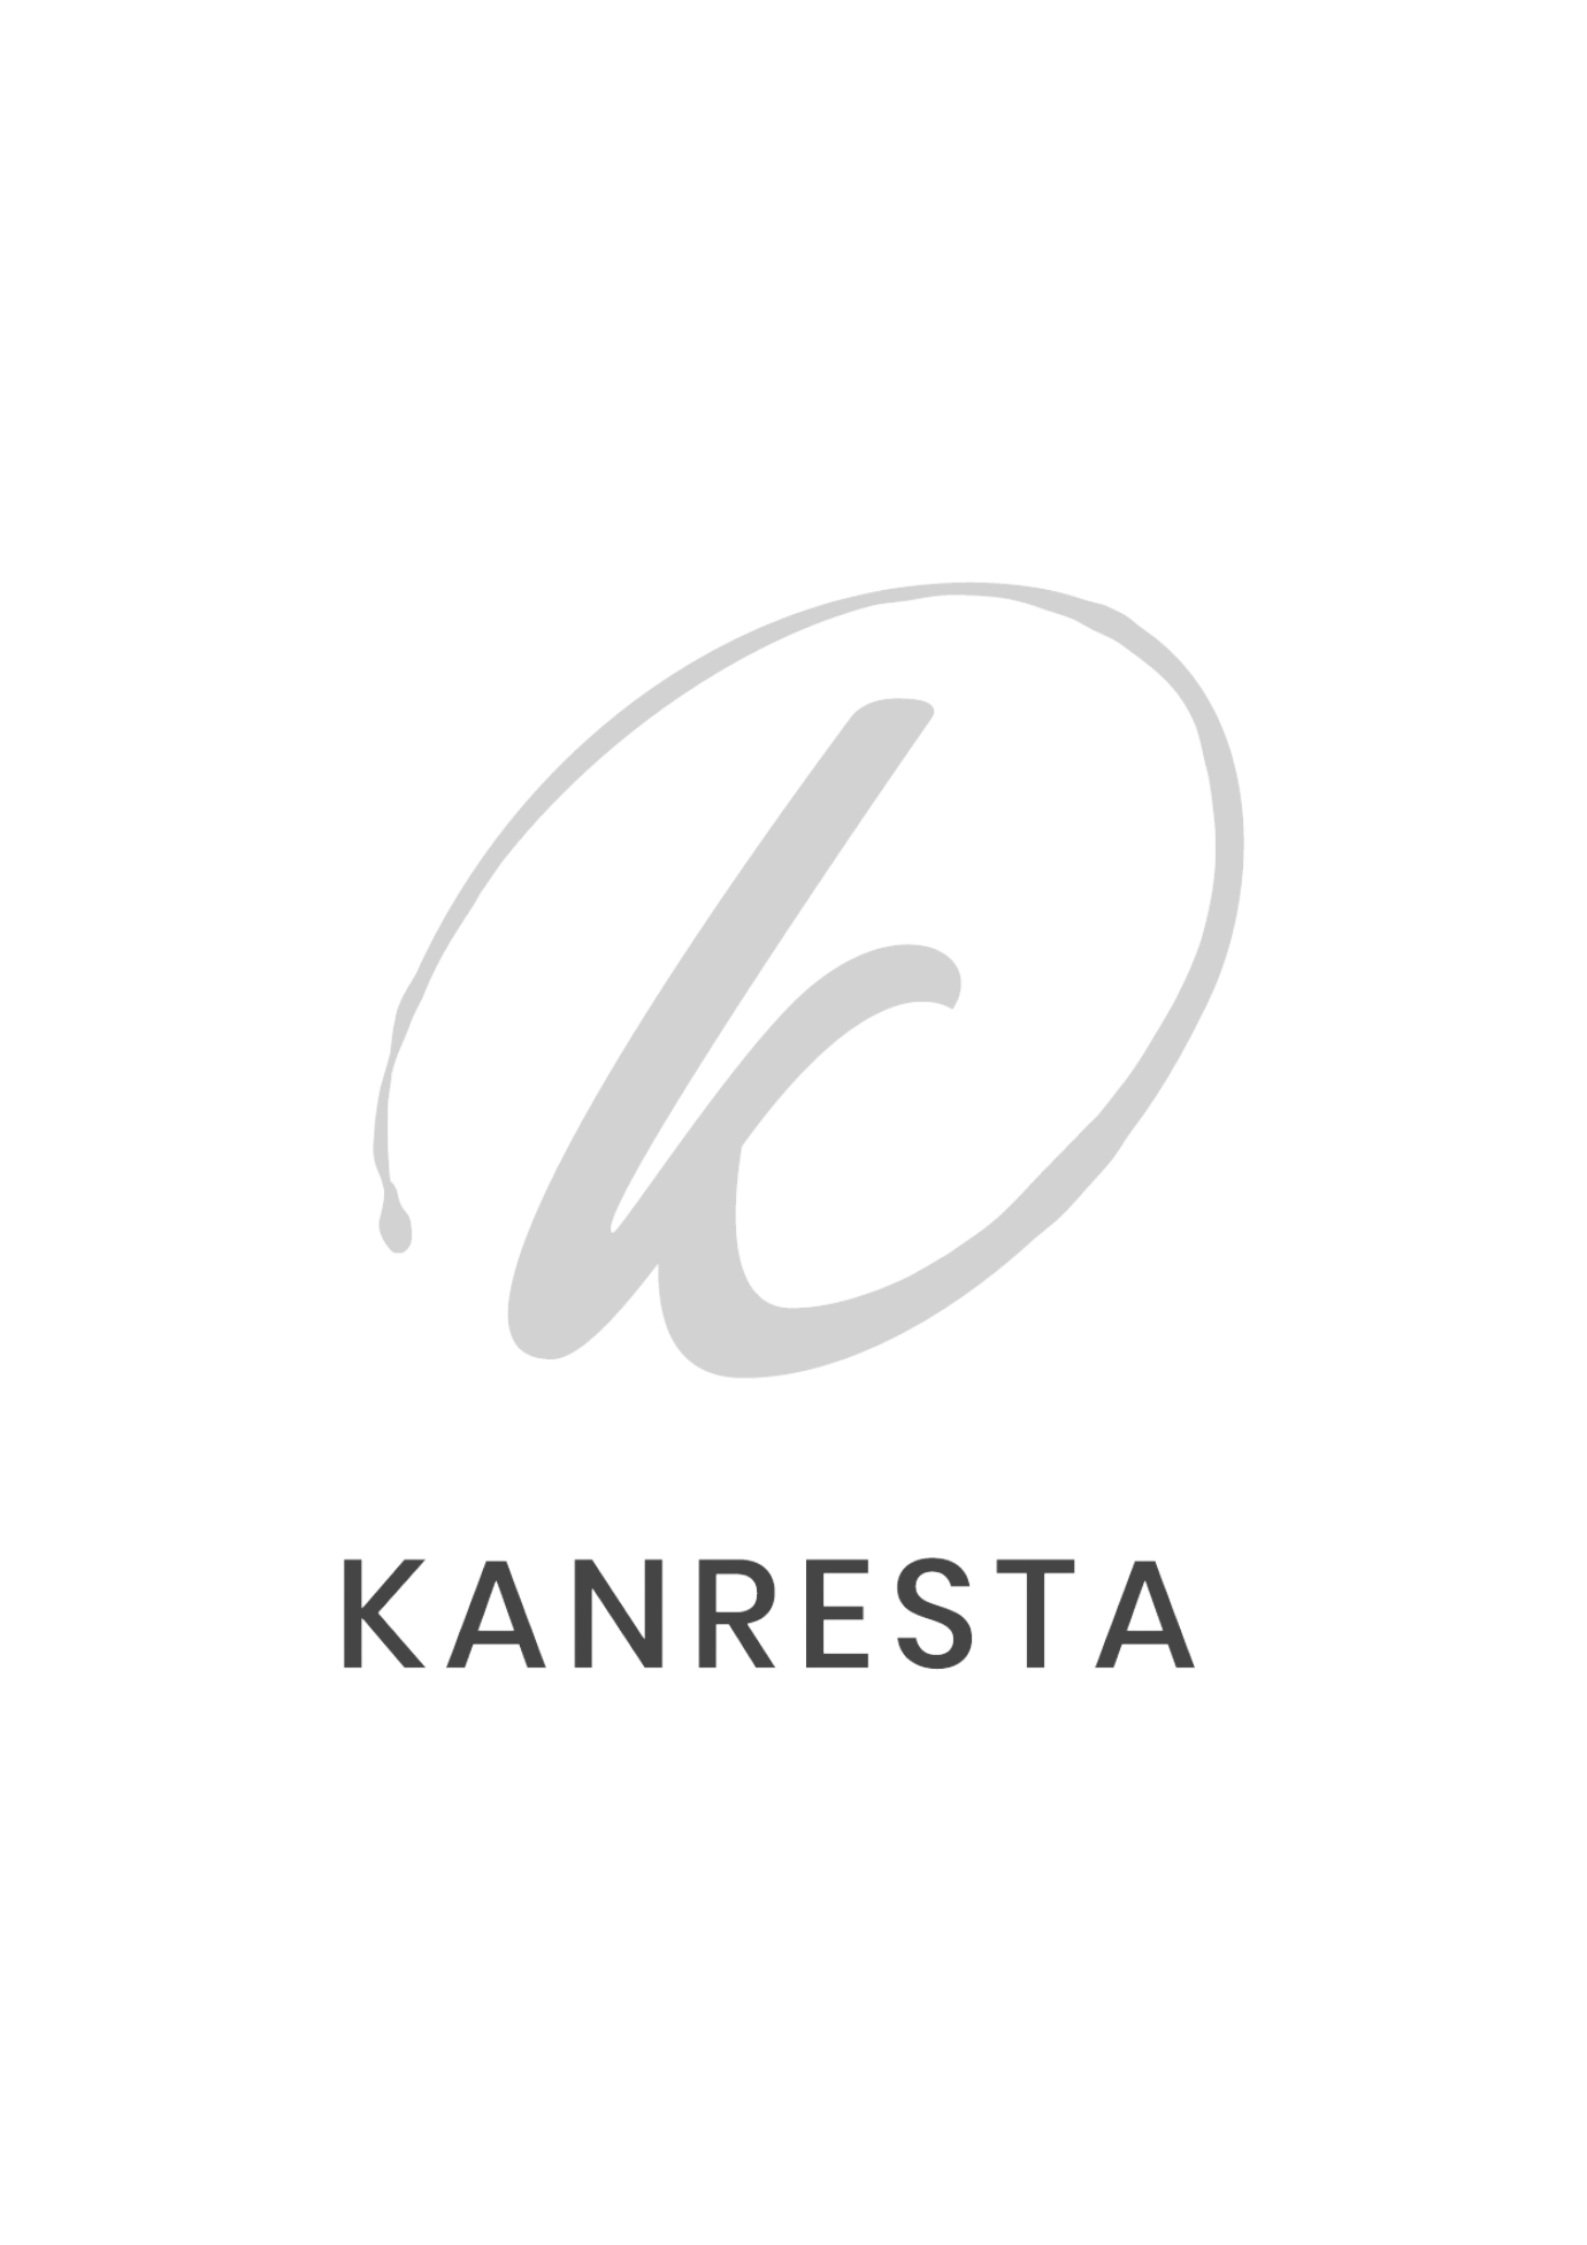 Kanresta+logo.jpg